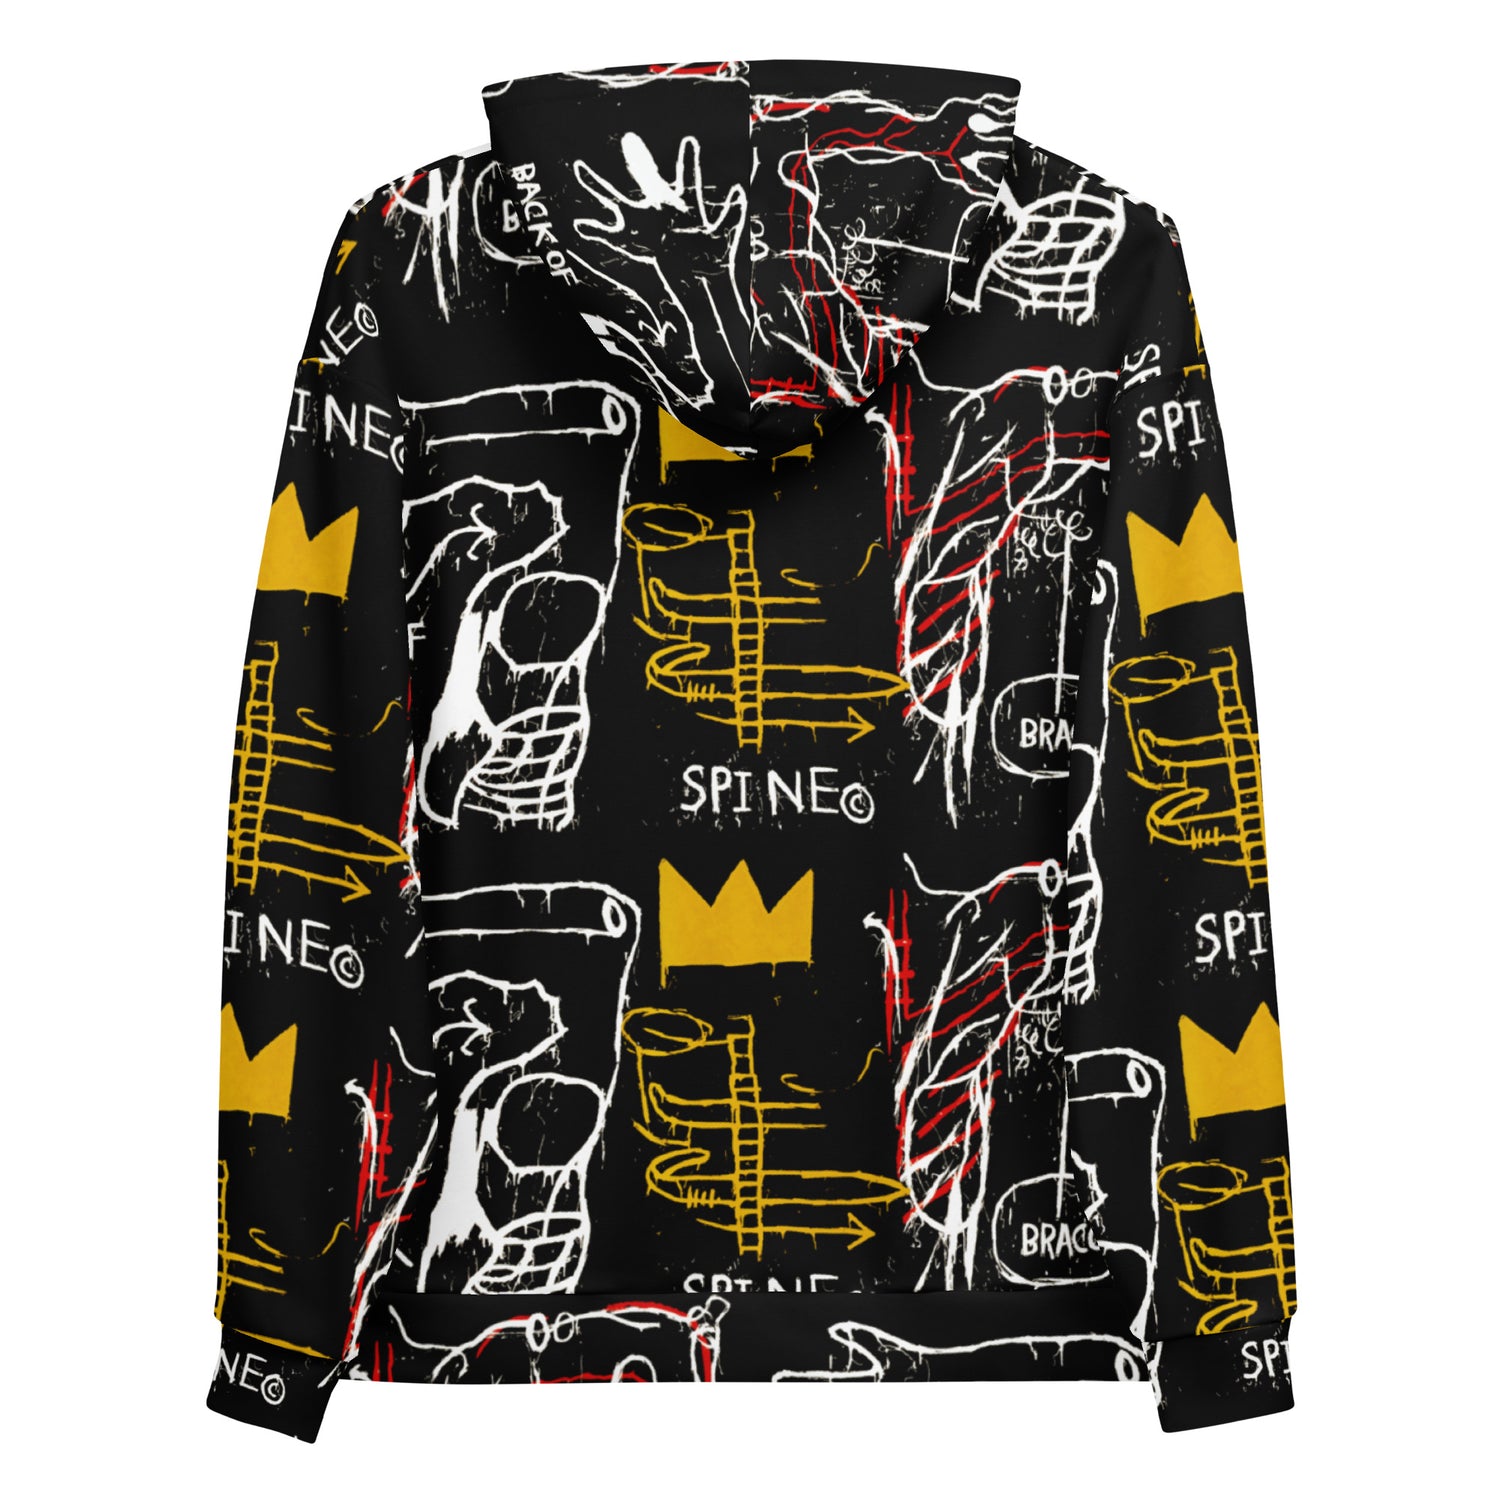 Jean-Michel Basquiat "Back of the Neck" Artwork Printed Premium Streetwear Sweatshirt Hoodie Black Graffiti Harajuku